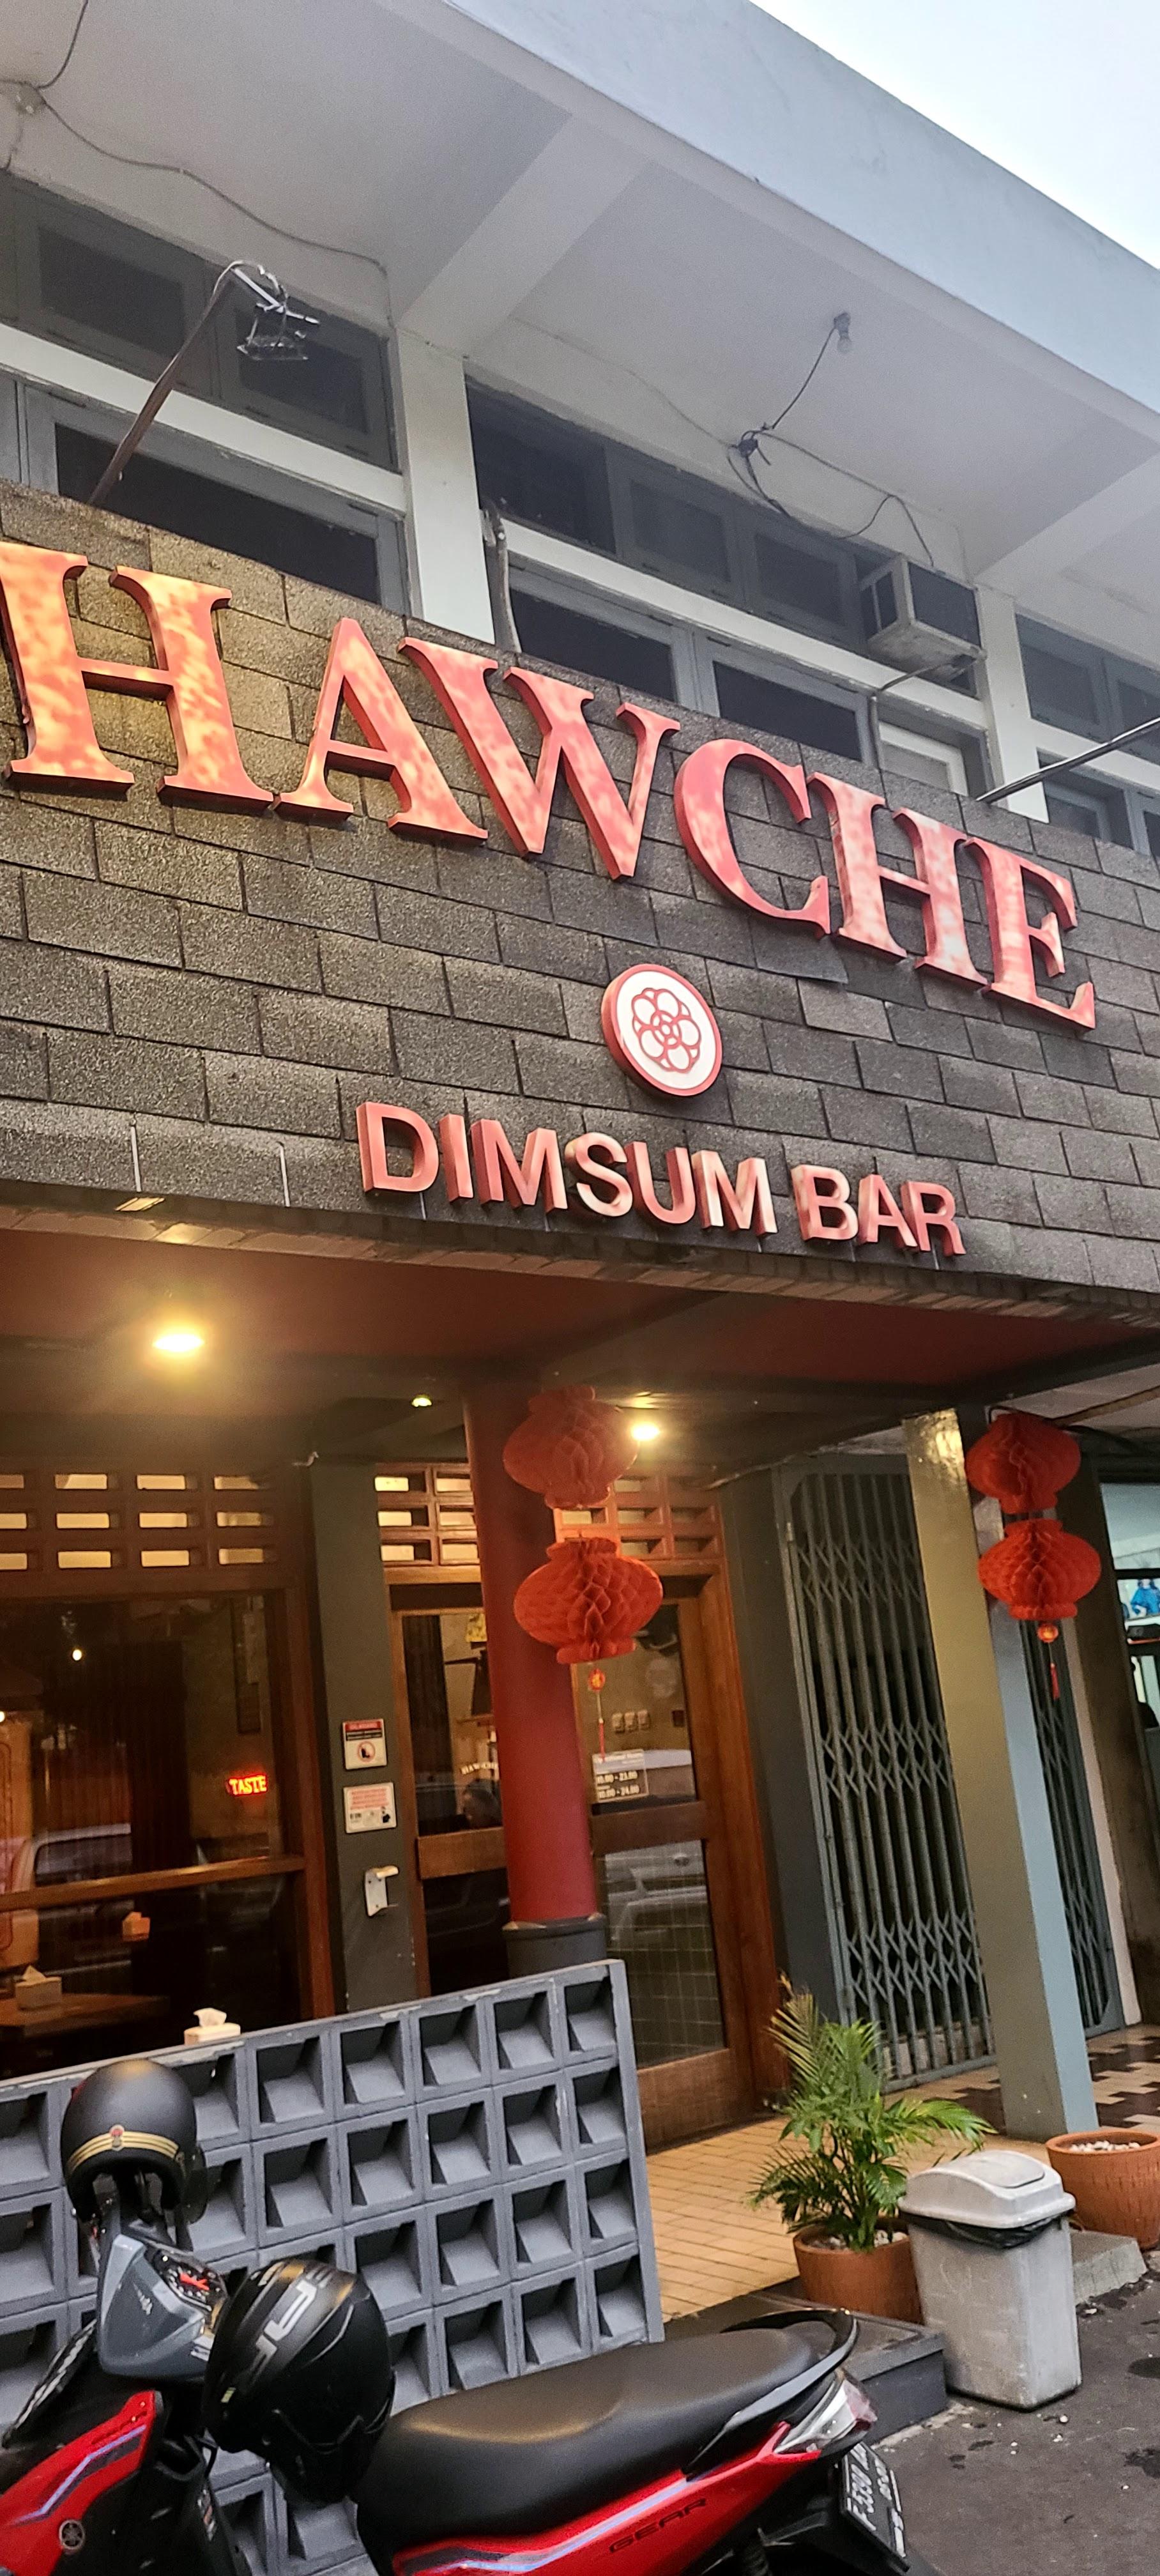 Hawche Dimsum Bar review